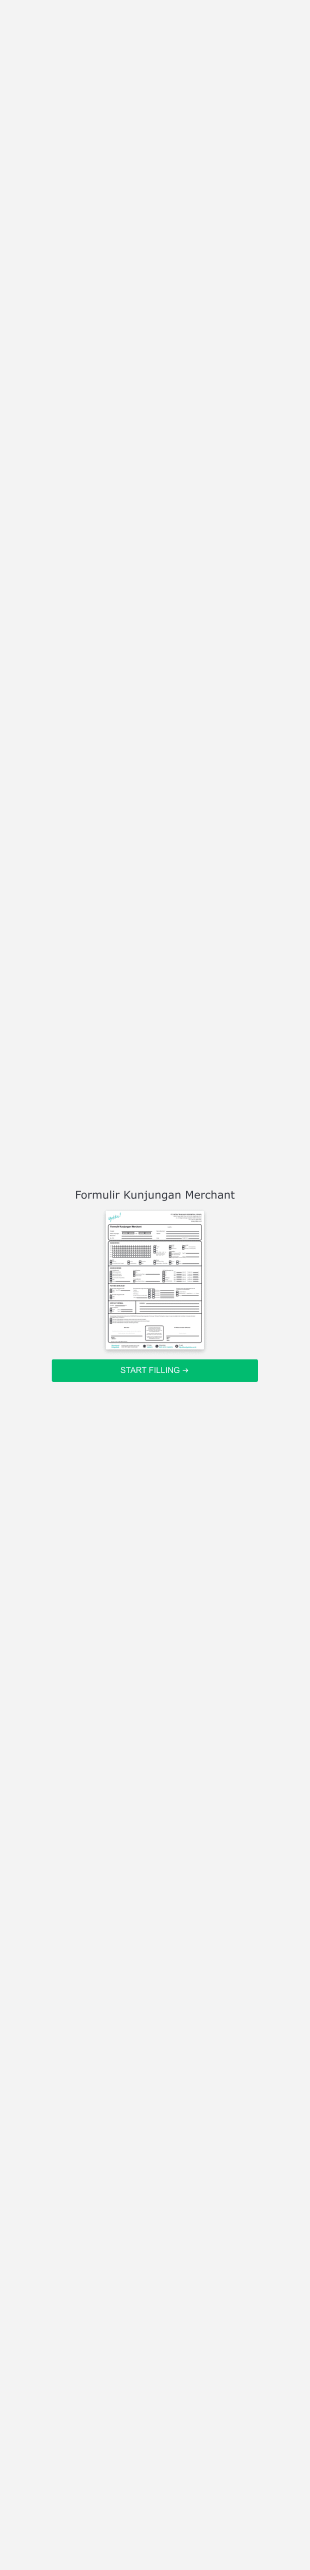 Form Kunjungan Merchant Form Template